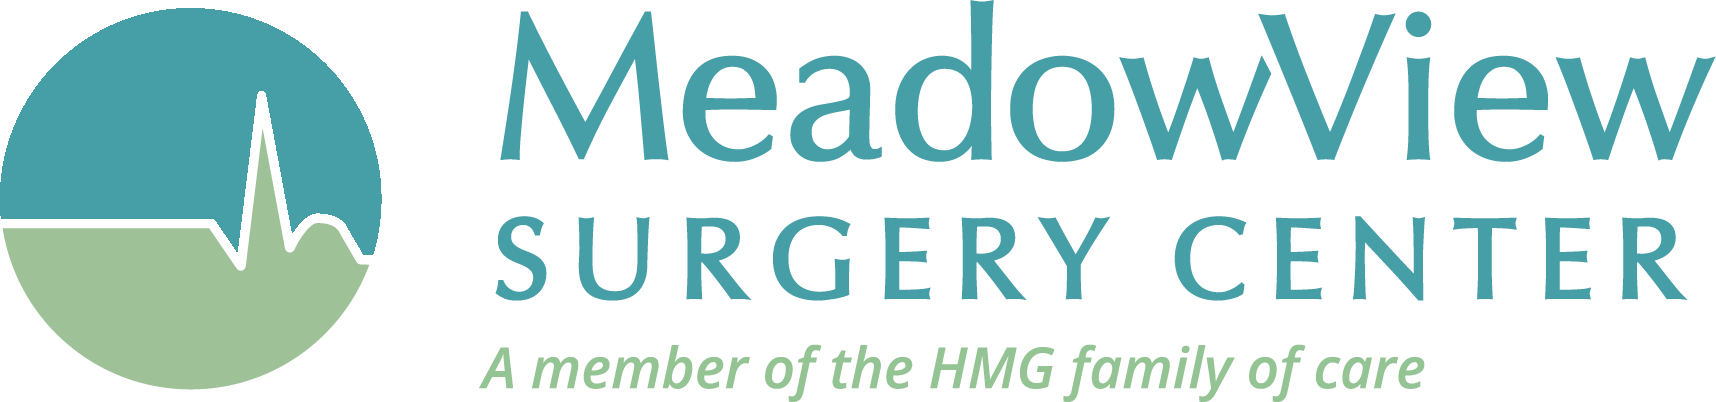 MeadowView Surgery Center logo